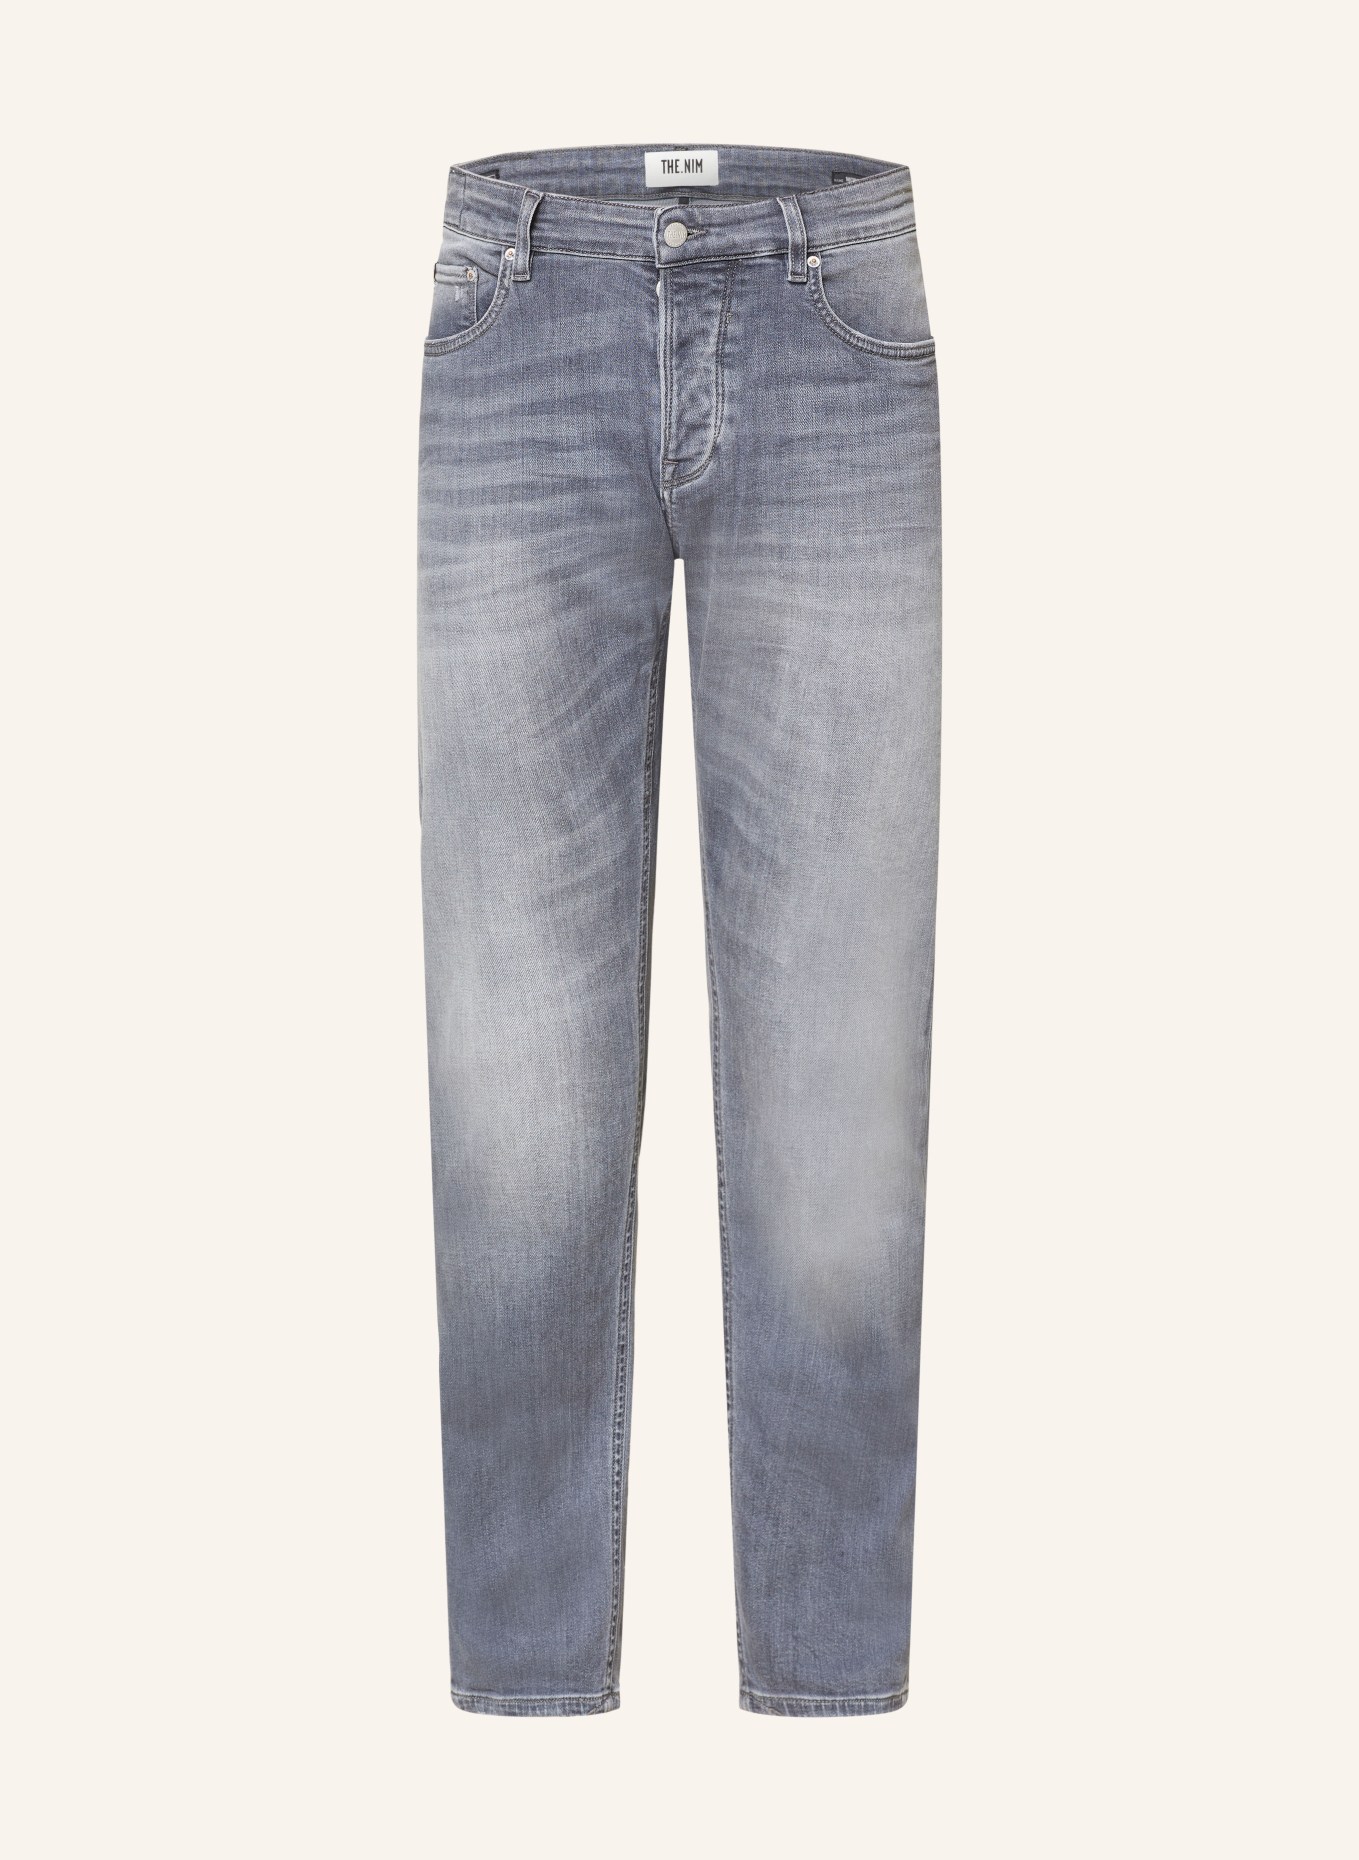 THE.NIM STANDARD Jeans MORRISON Tapered Slim Fit, Farbe: W718 GREY (Bild 1)